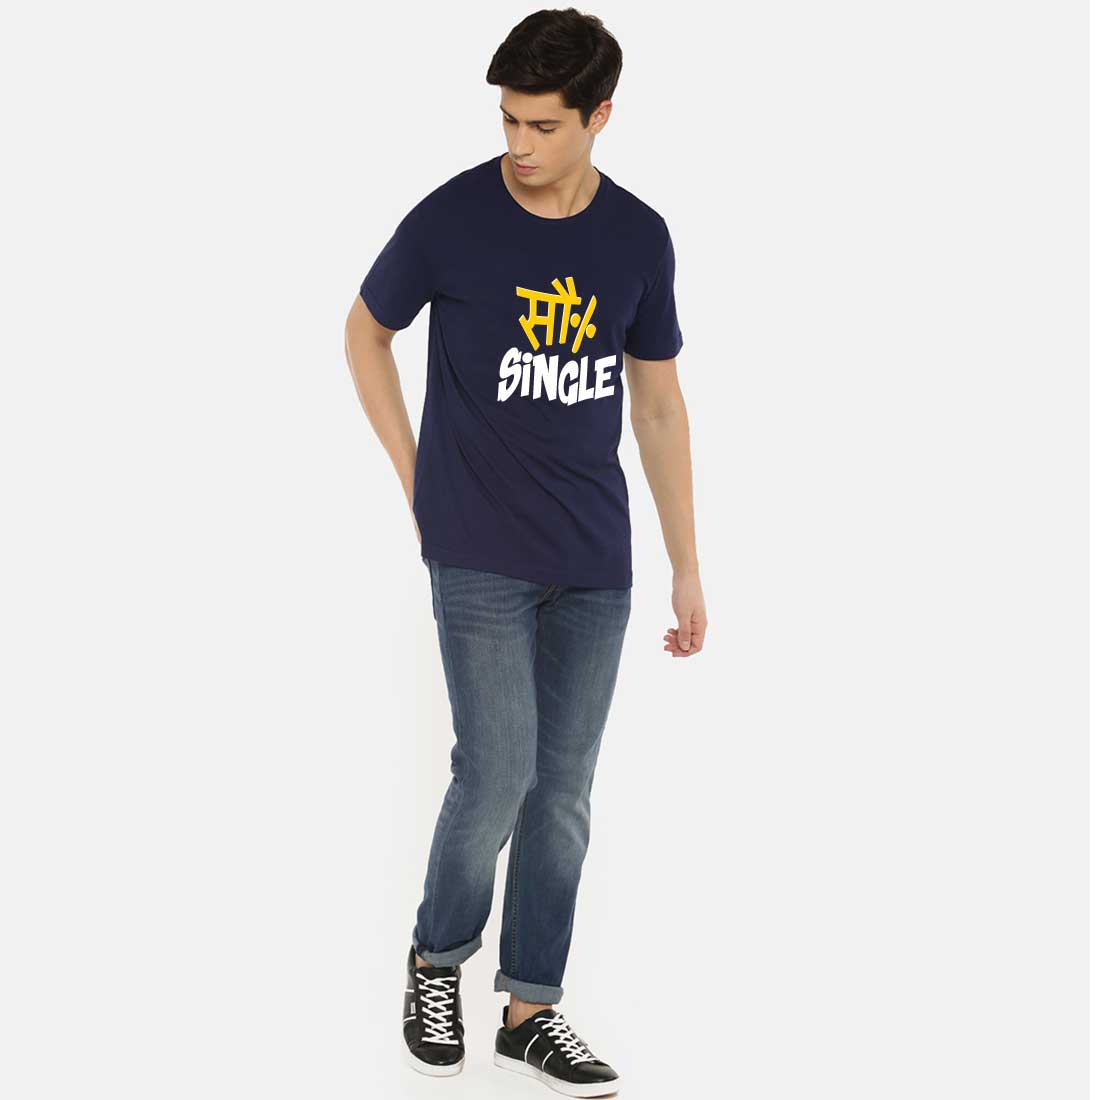 So Percent Single Blue Men T-Shirt